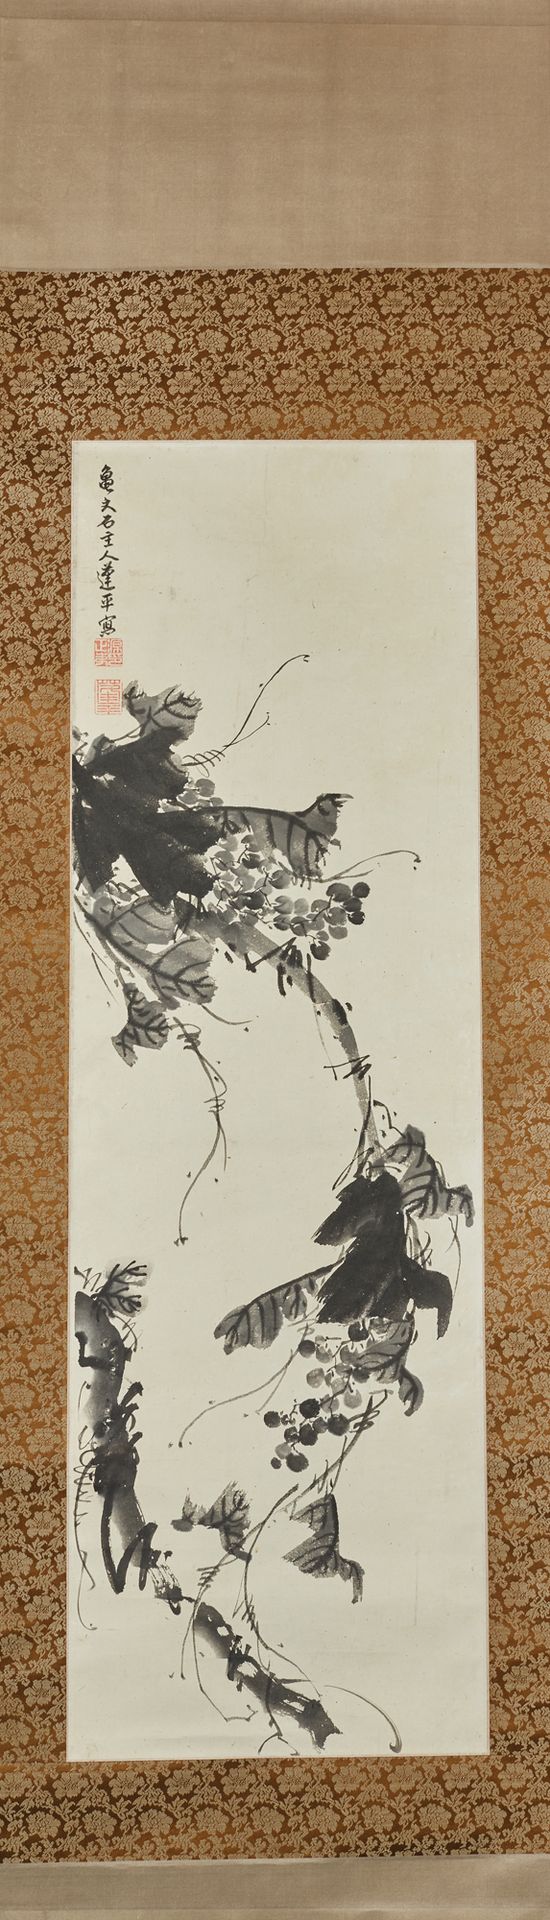 Satake Hohei (?-1807) 纸上水墨，藤枝。签名。
尺寸95 x 30厘米。
被装在一个kakemono。